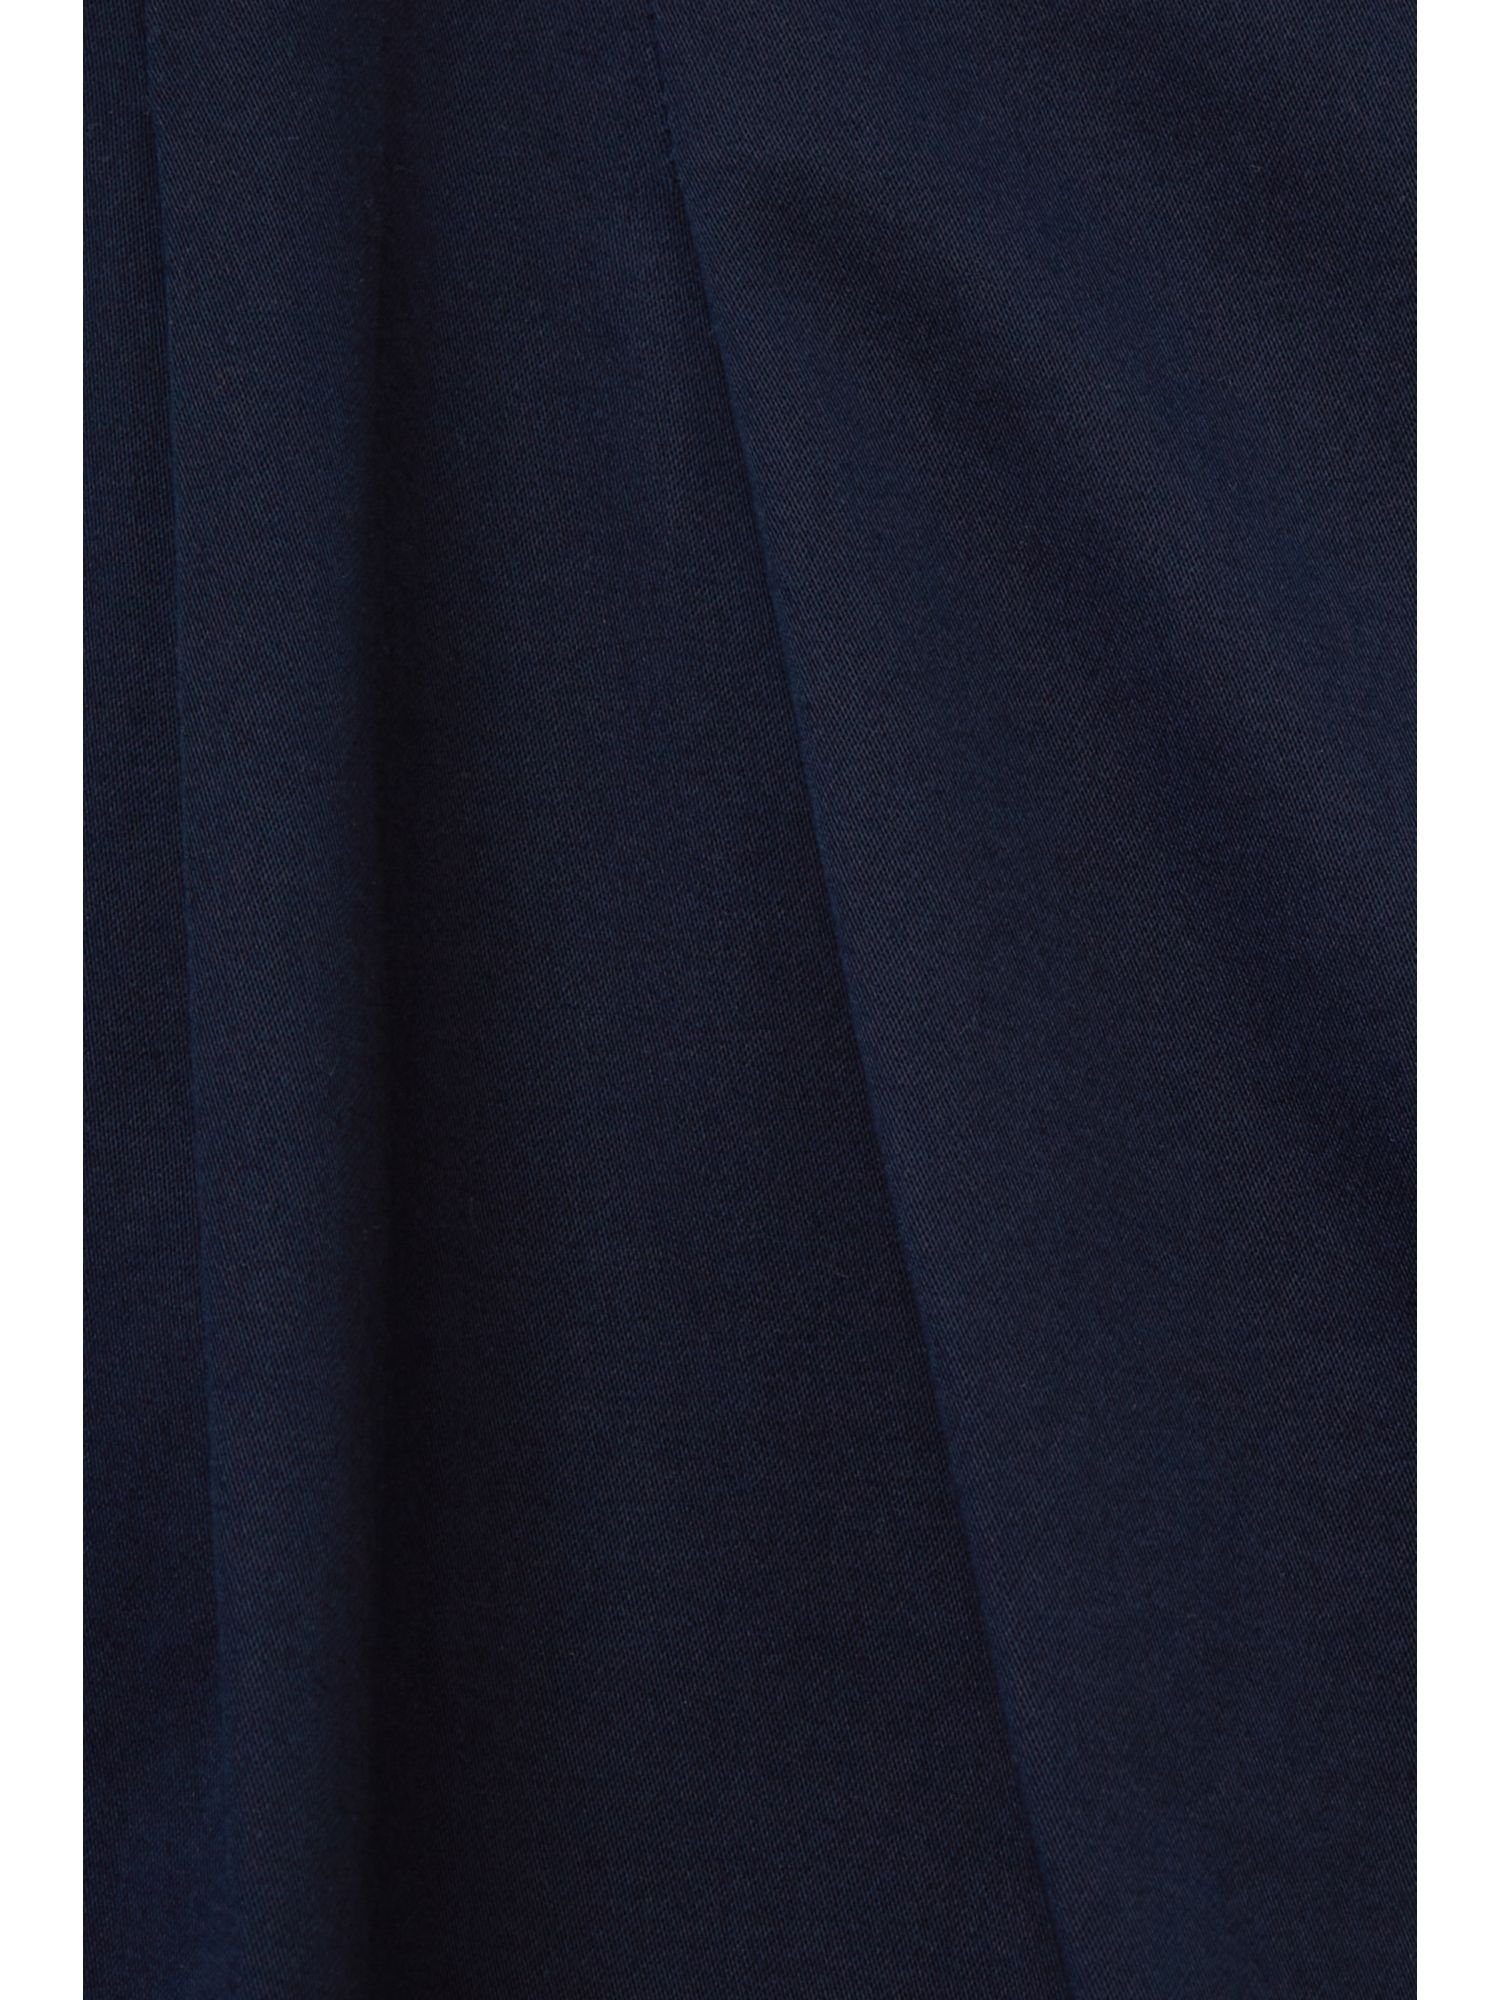 Pants Collection NAVY woven Esprit 7/8-Hose